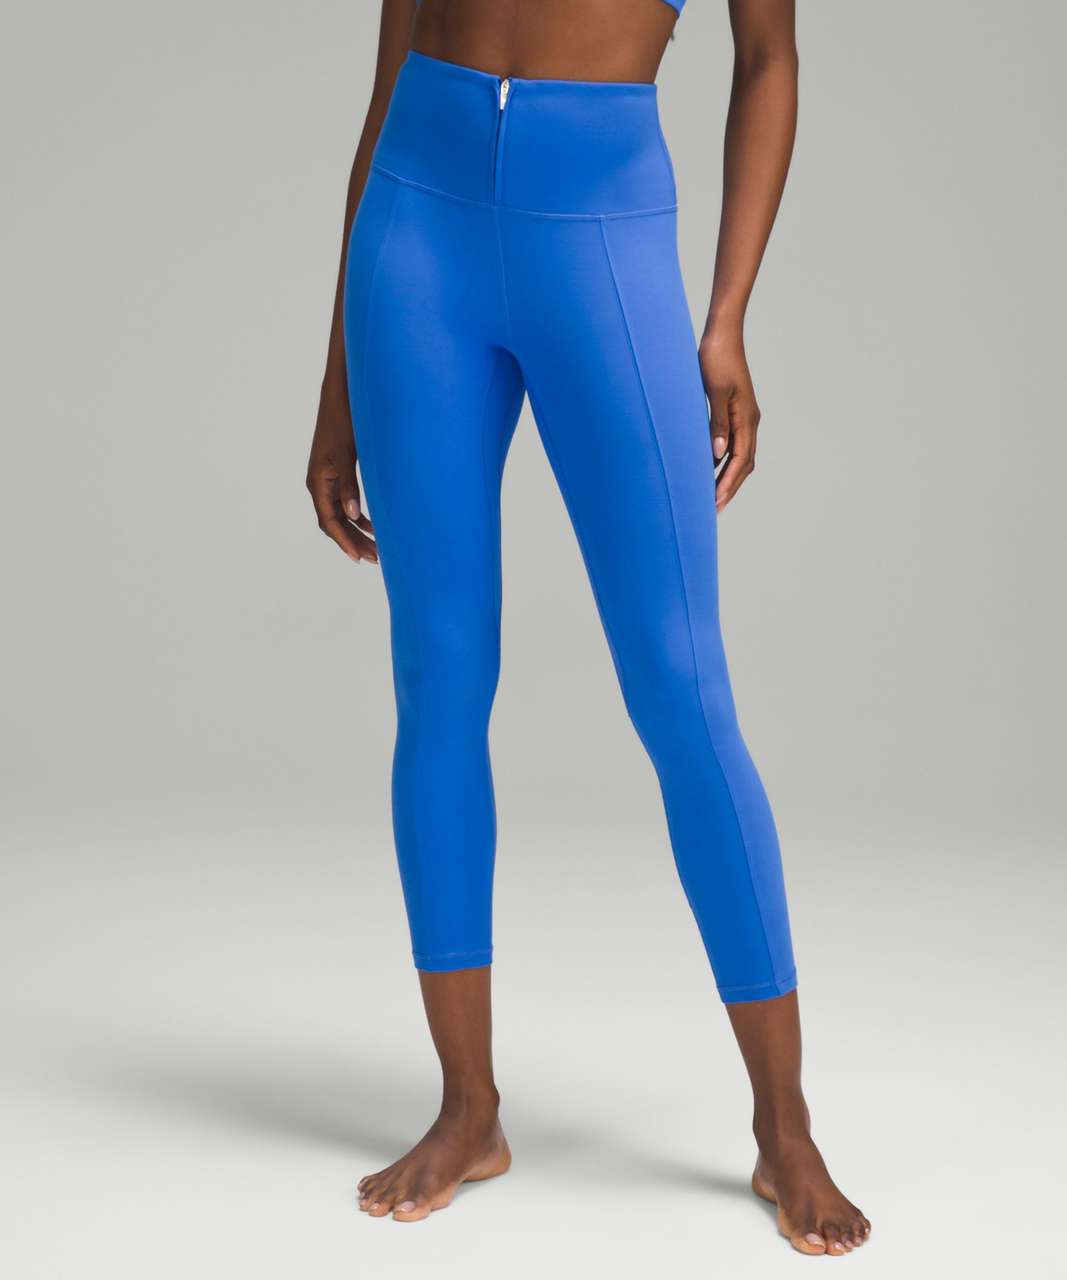 lululemon leggings navy blue zip pockets size 6